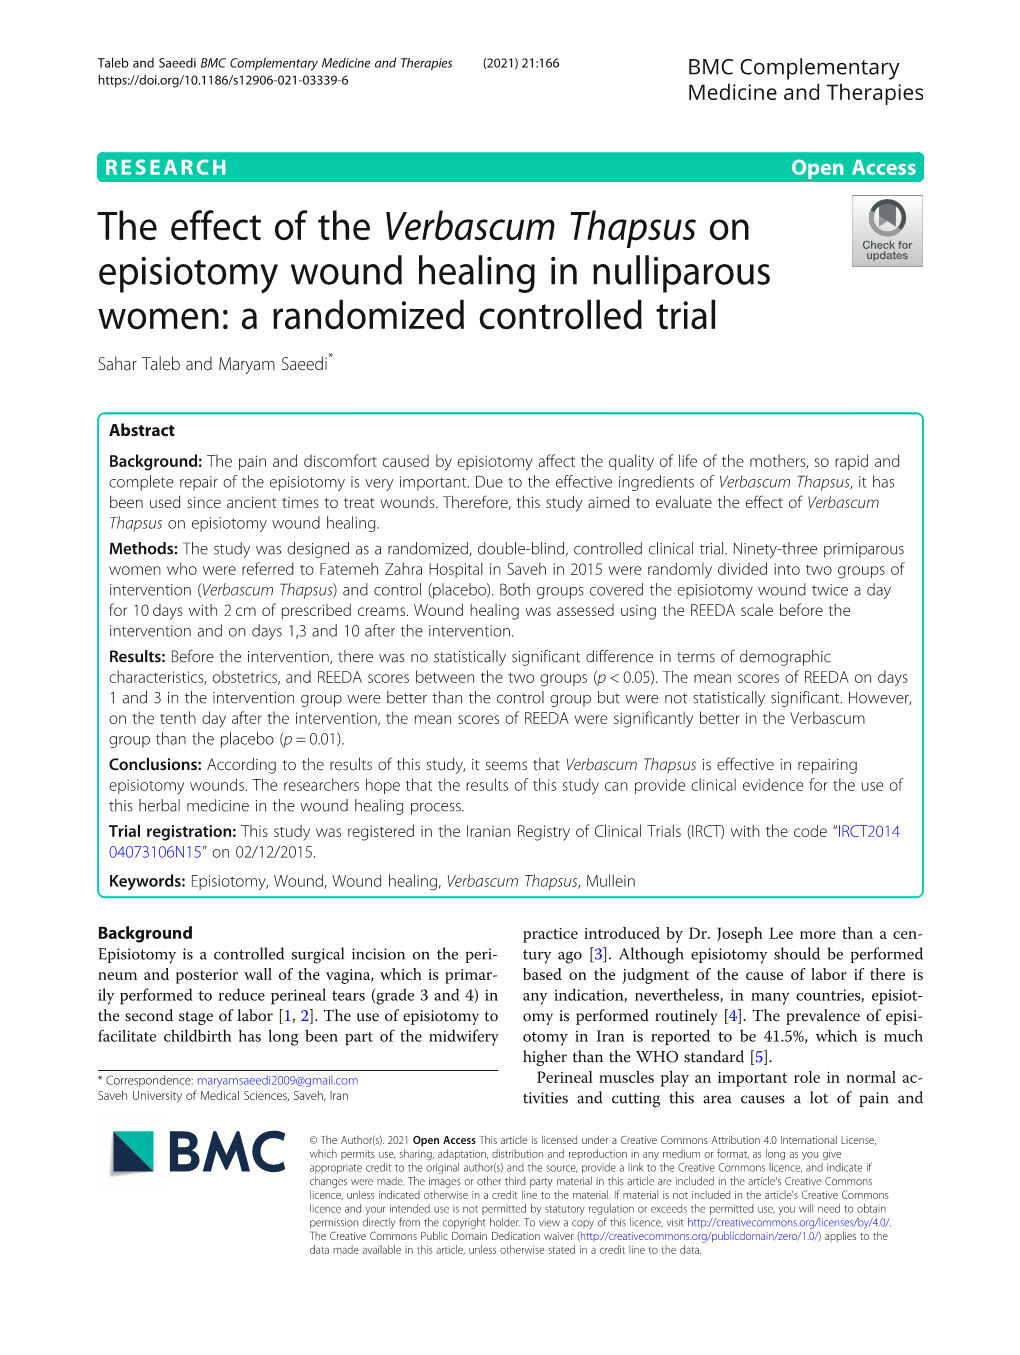 Verbascum Thapsus on Episiotomy Wound Healing in Nulliparous Women: a Randomized Controlled Trial Sahar Taleb and Maryam Saeedi*